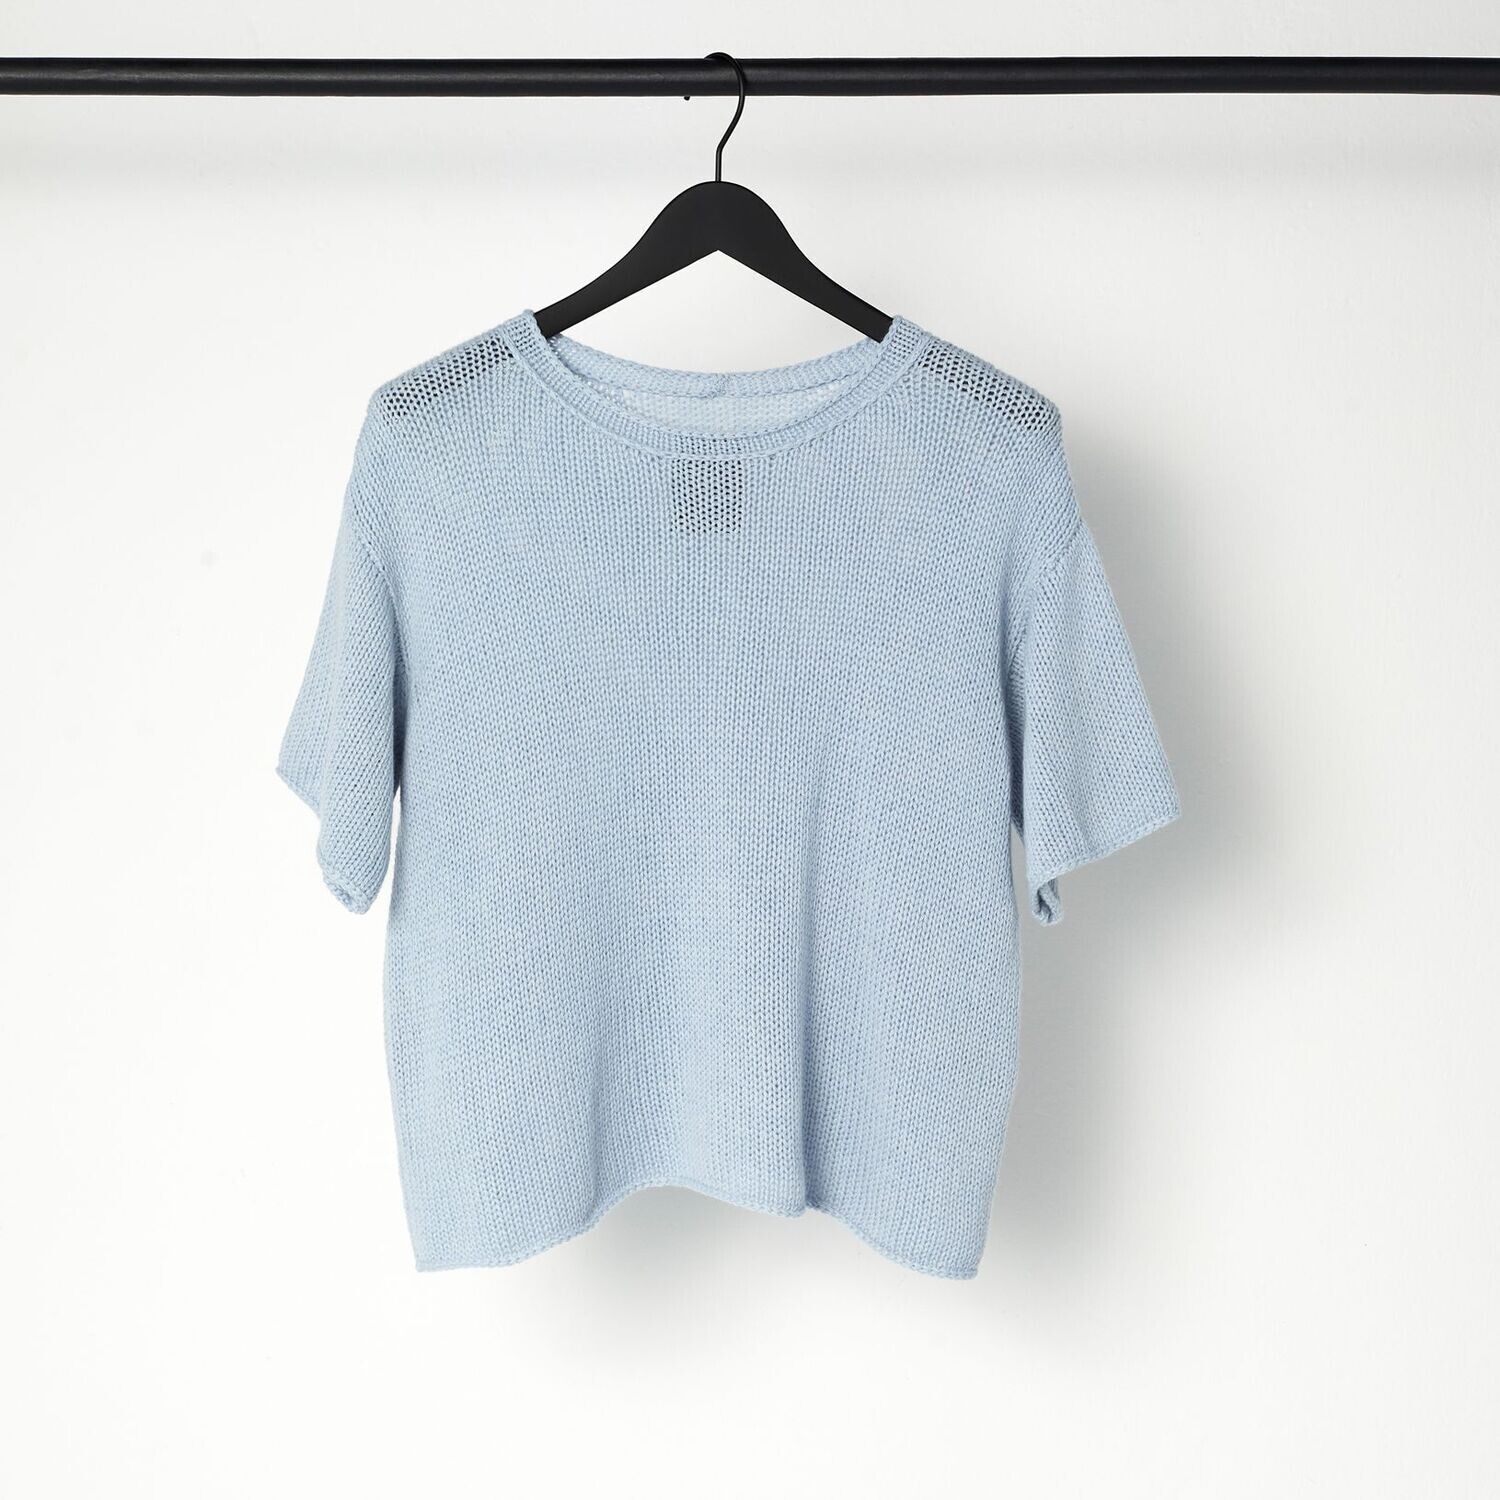 Cashmere-Shirt LEO, Farbe: hellblau, Größe: M/L